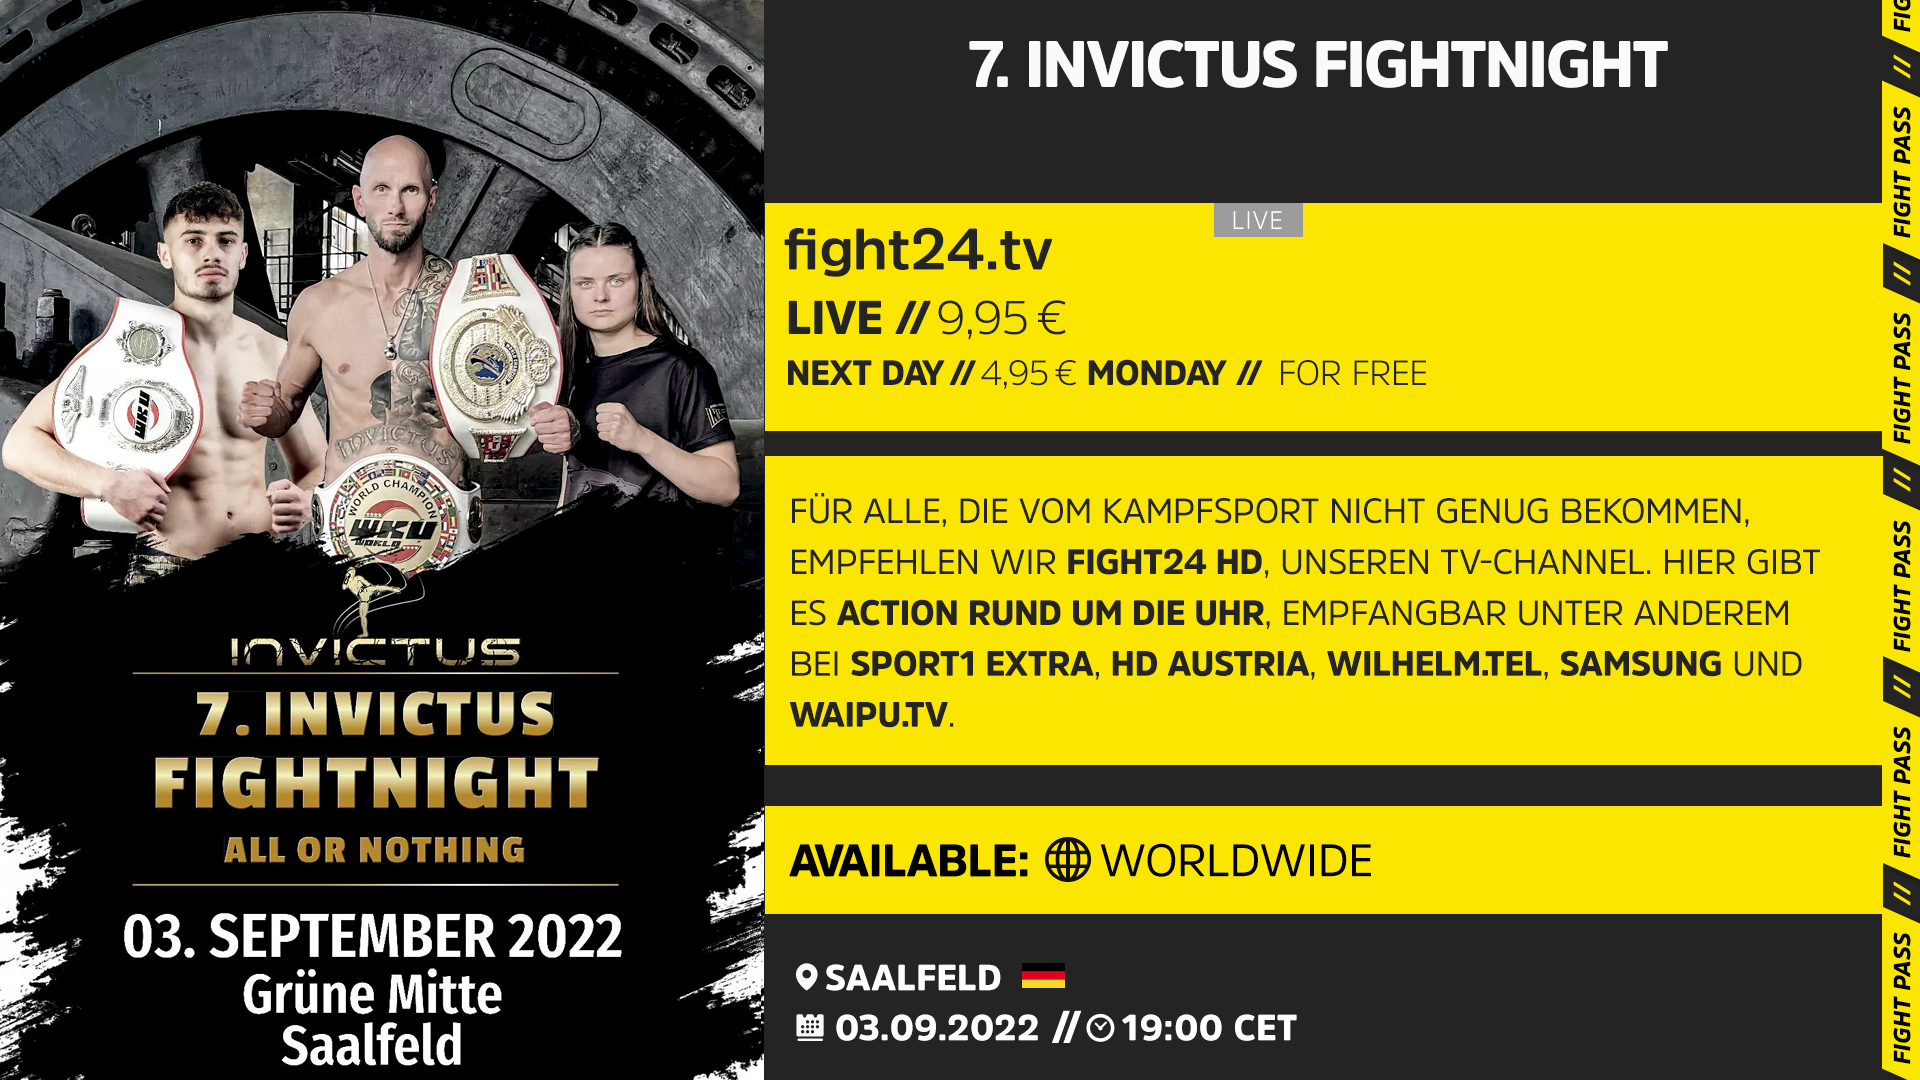 Invictus Fightnight - Livestream